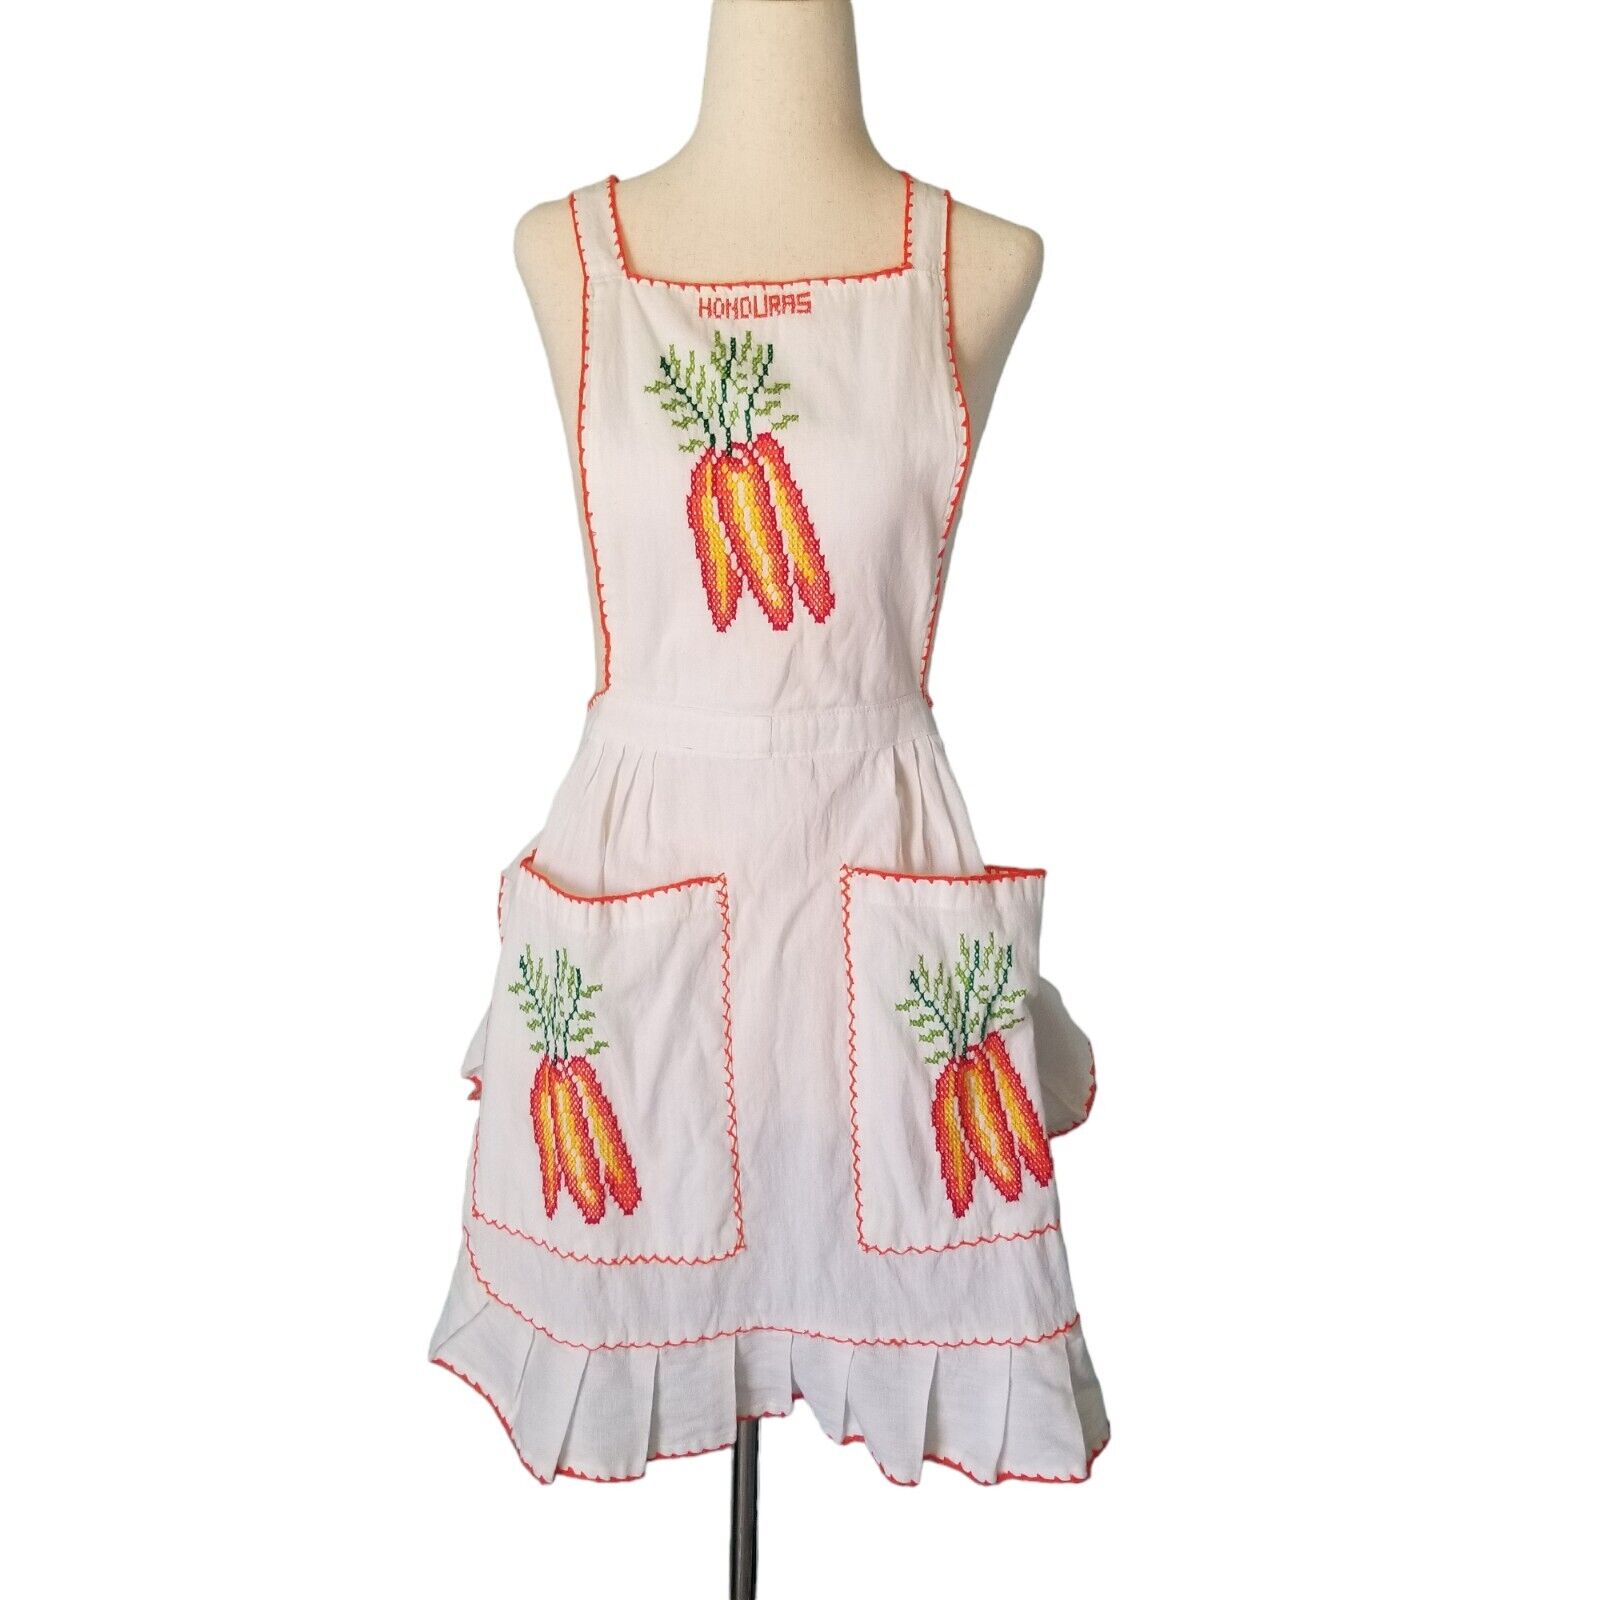 Embroidered Bib Apron White Orange Carrots Honduras Pockets Ruffle Tie Vintage